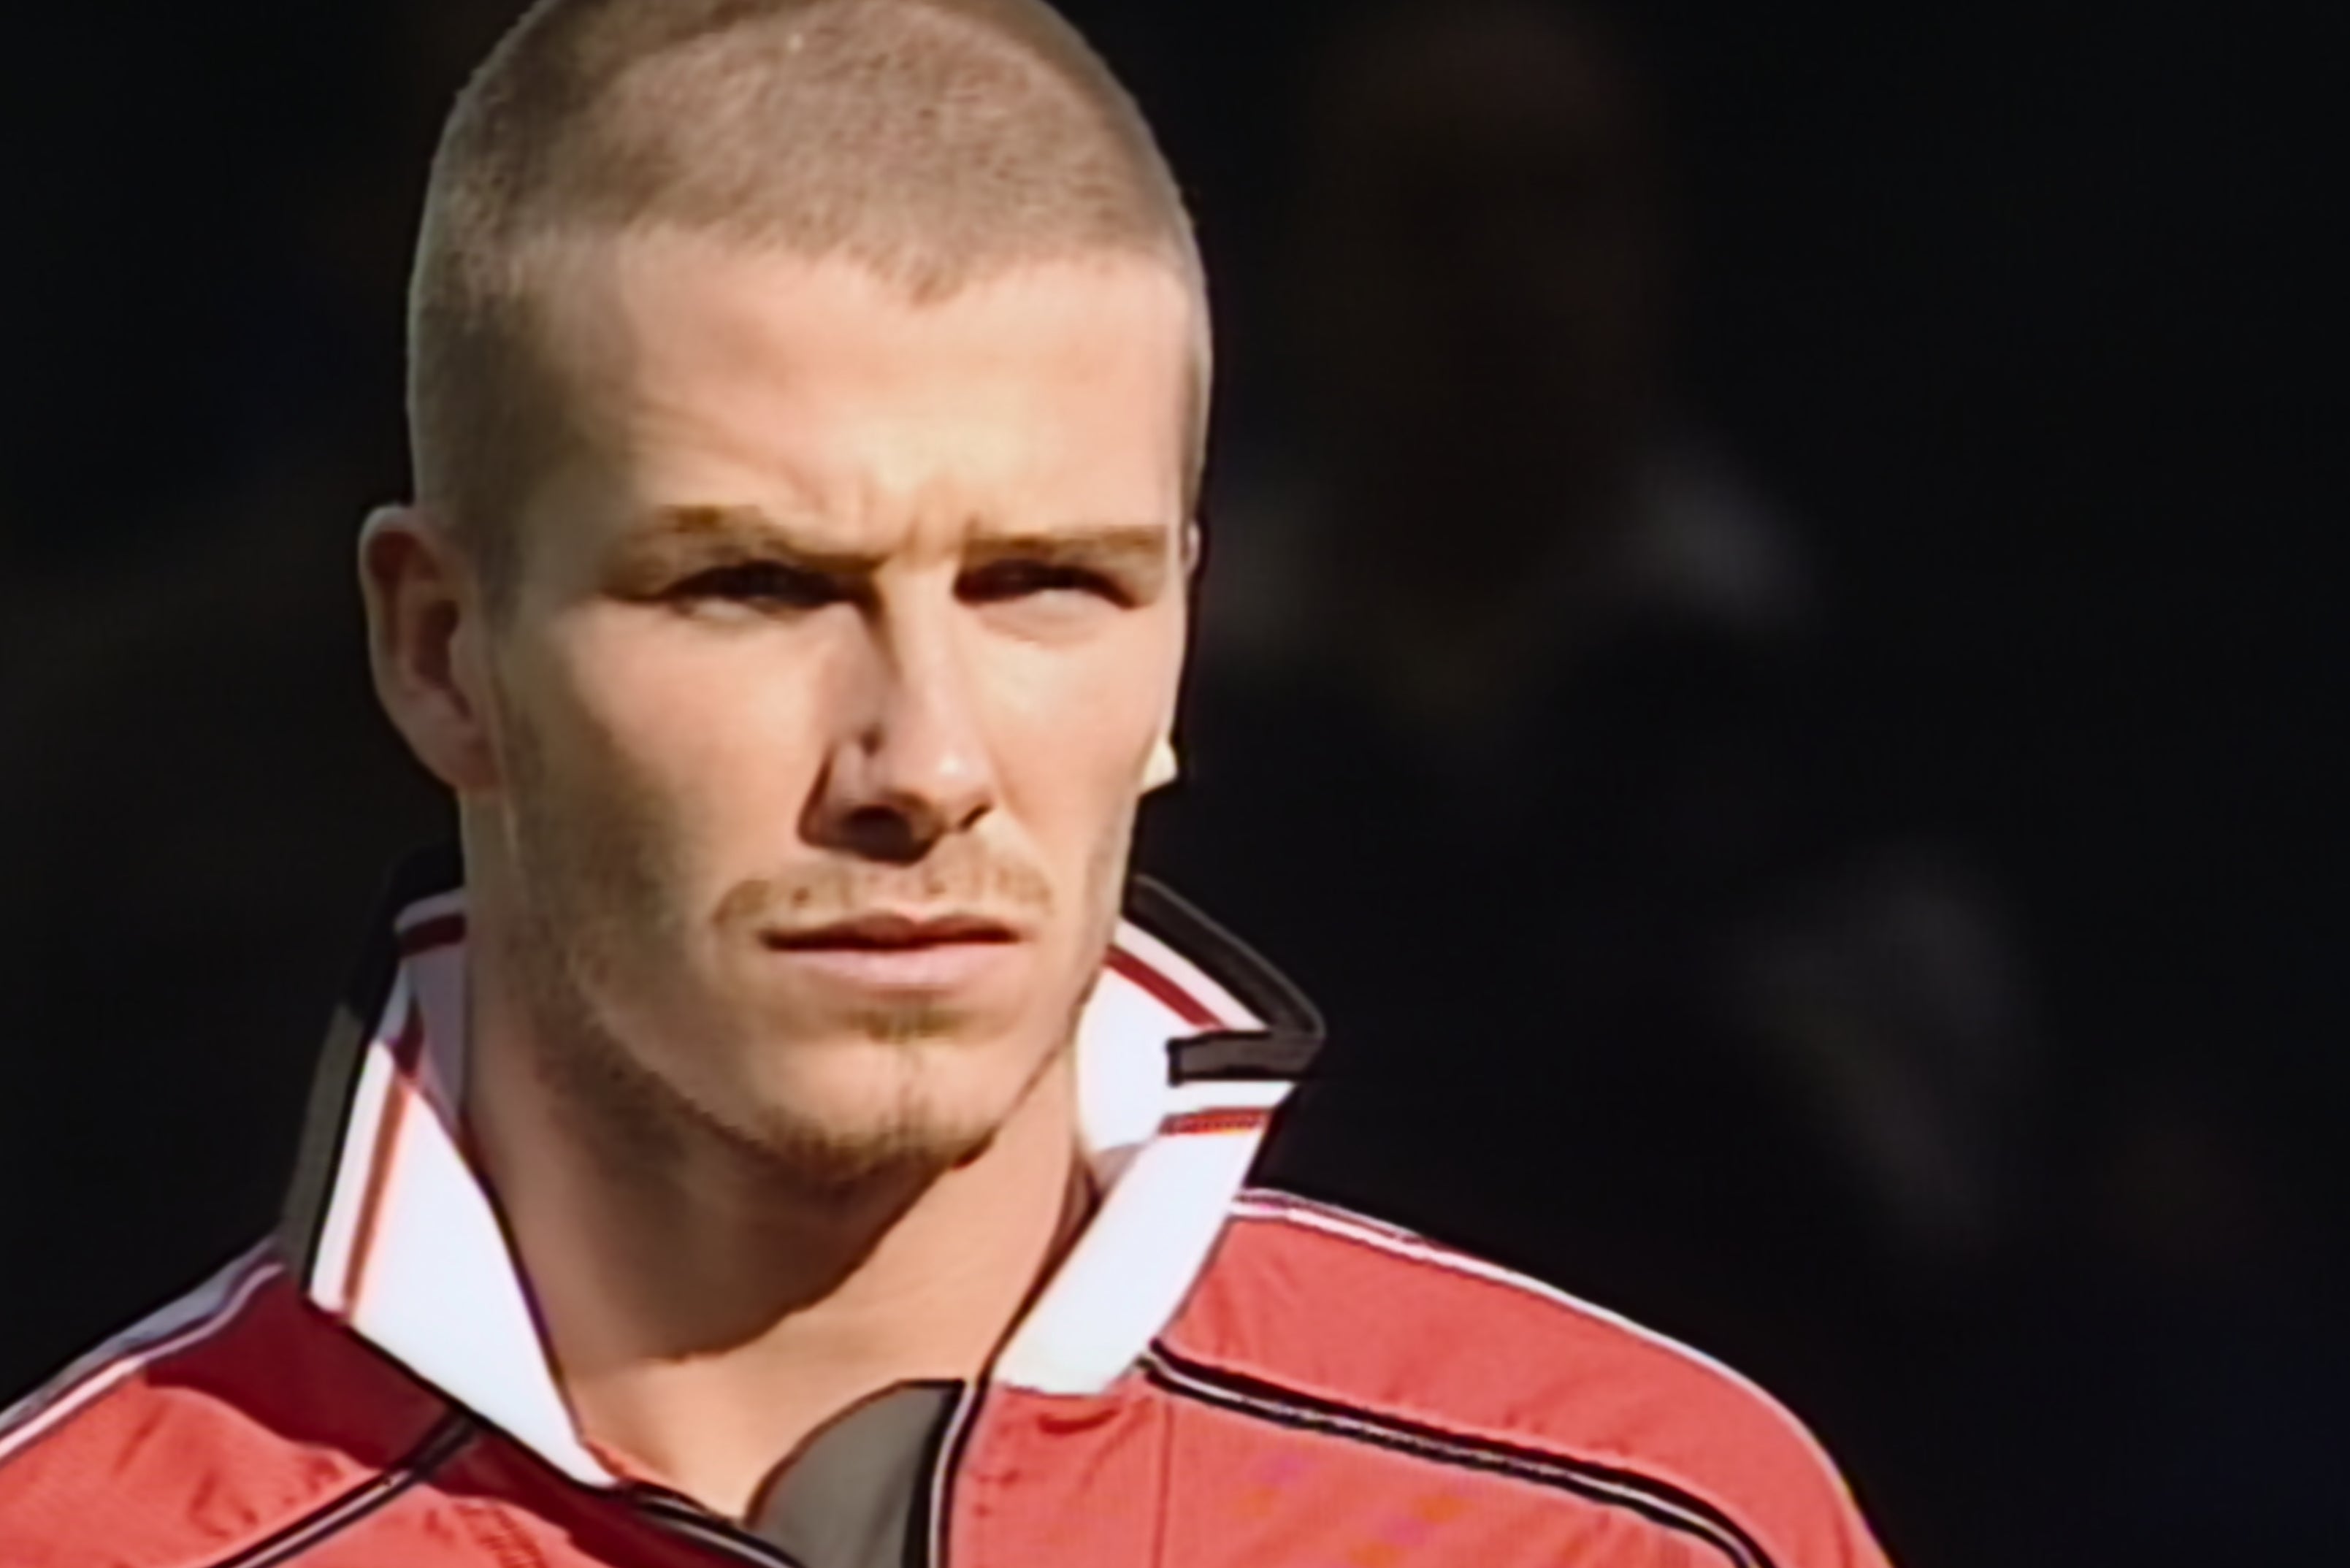 David Beckham in the 1990s